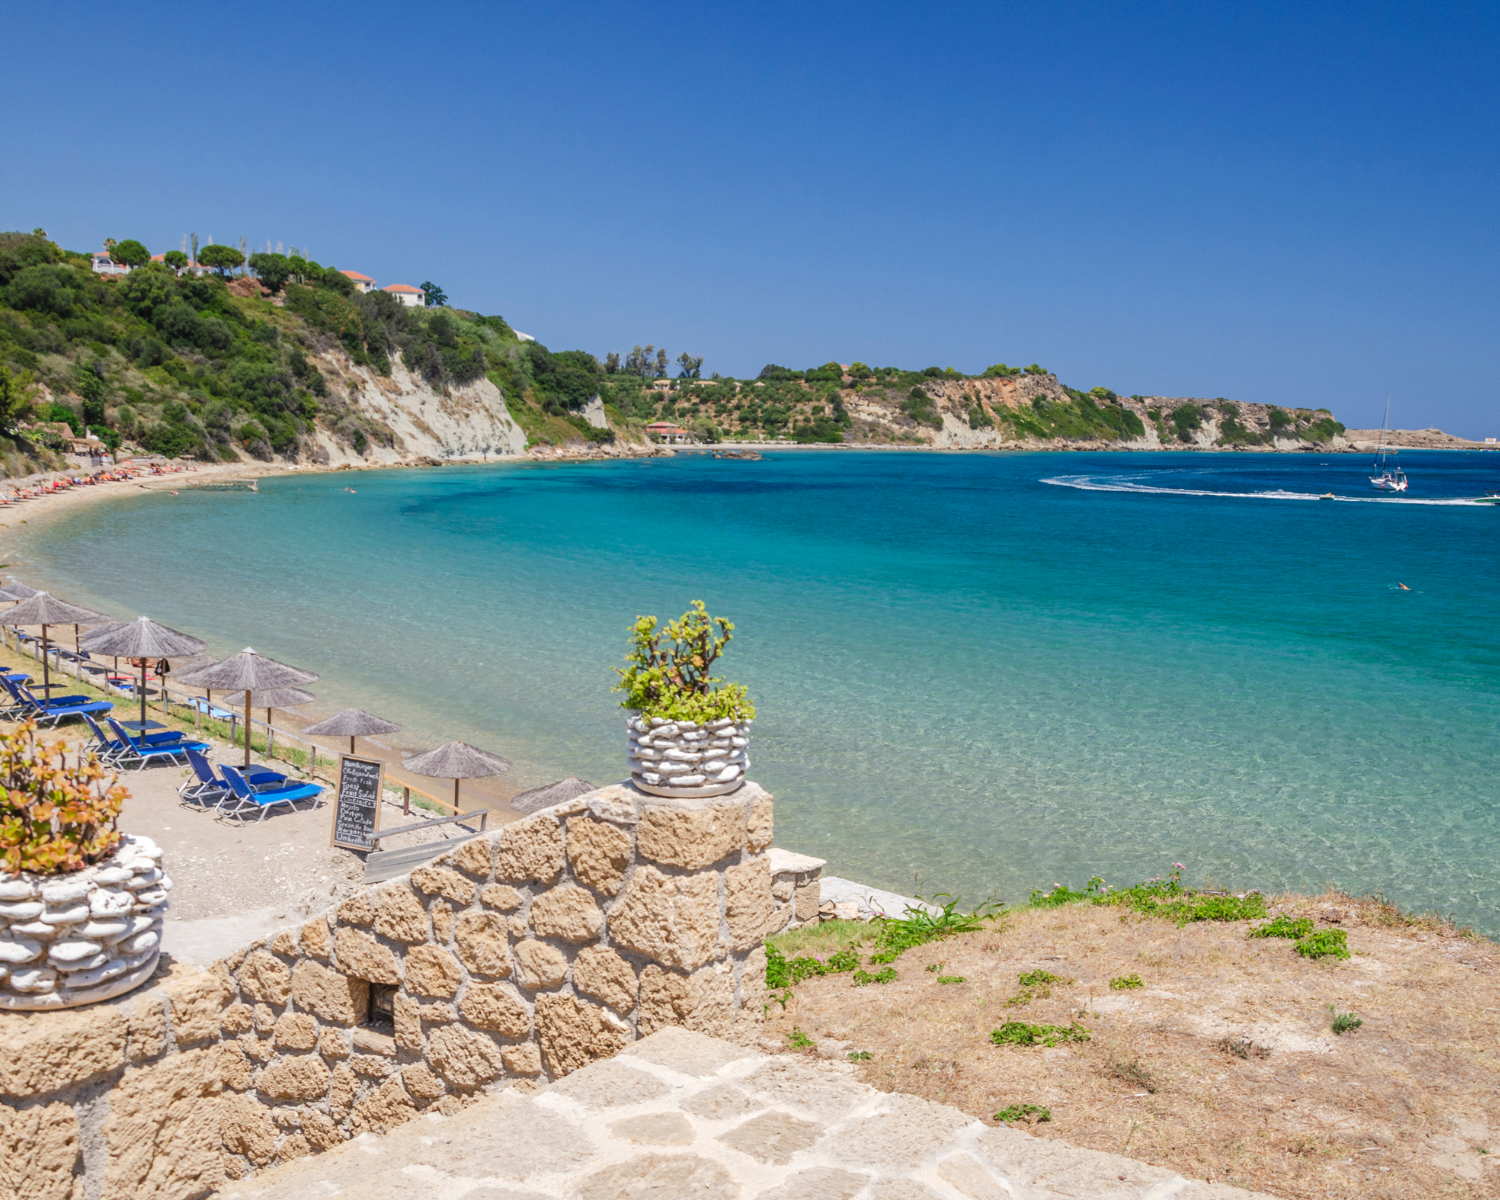 Beautiful Porto Roma sandy beach. It is situated on Vassilikos peninsula on the south east coast of Zakynthos island, Greece.